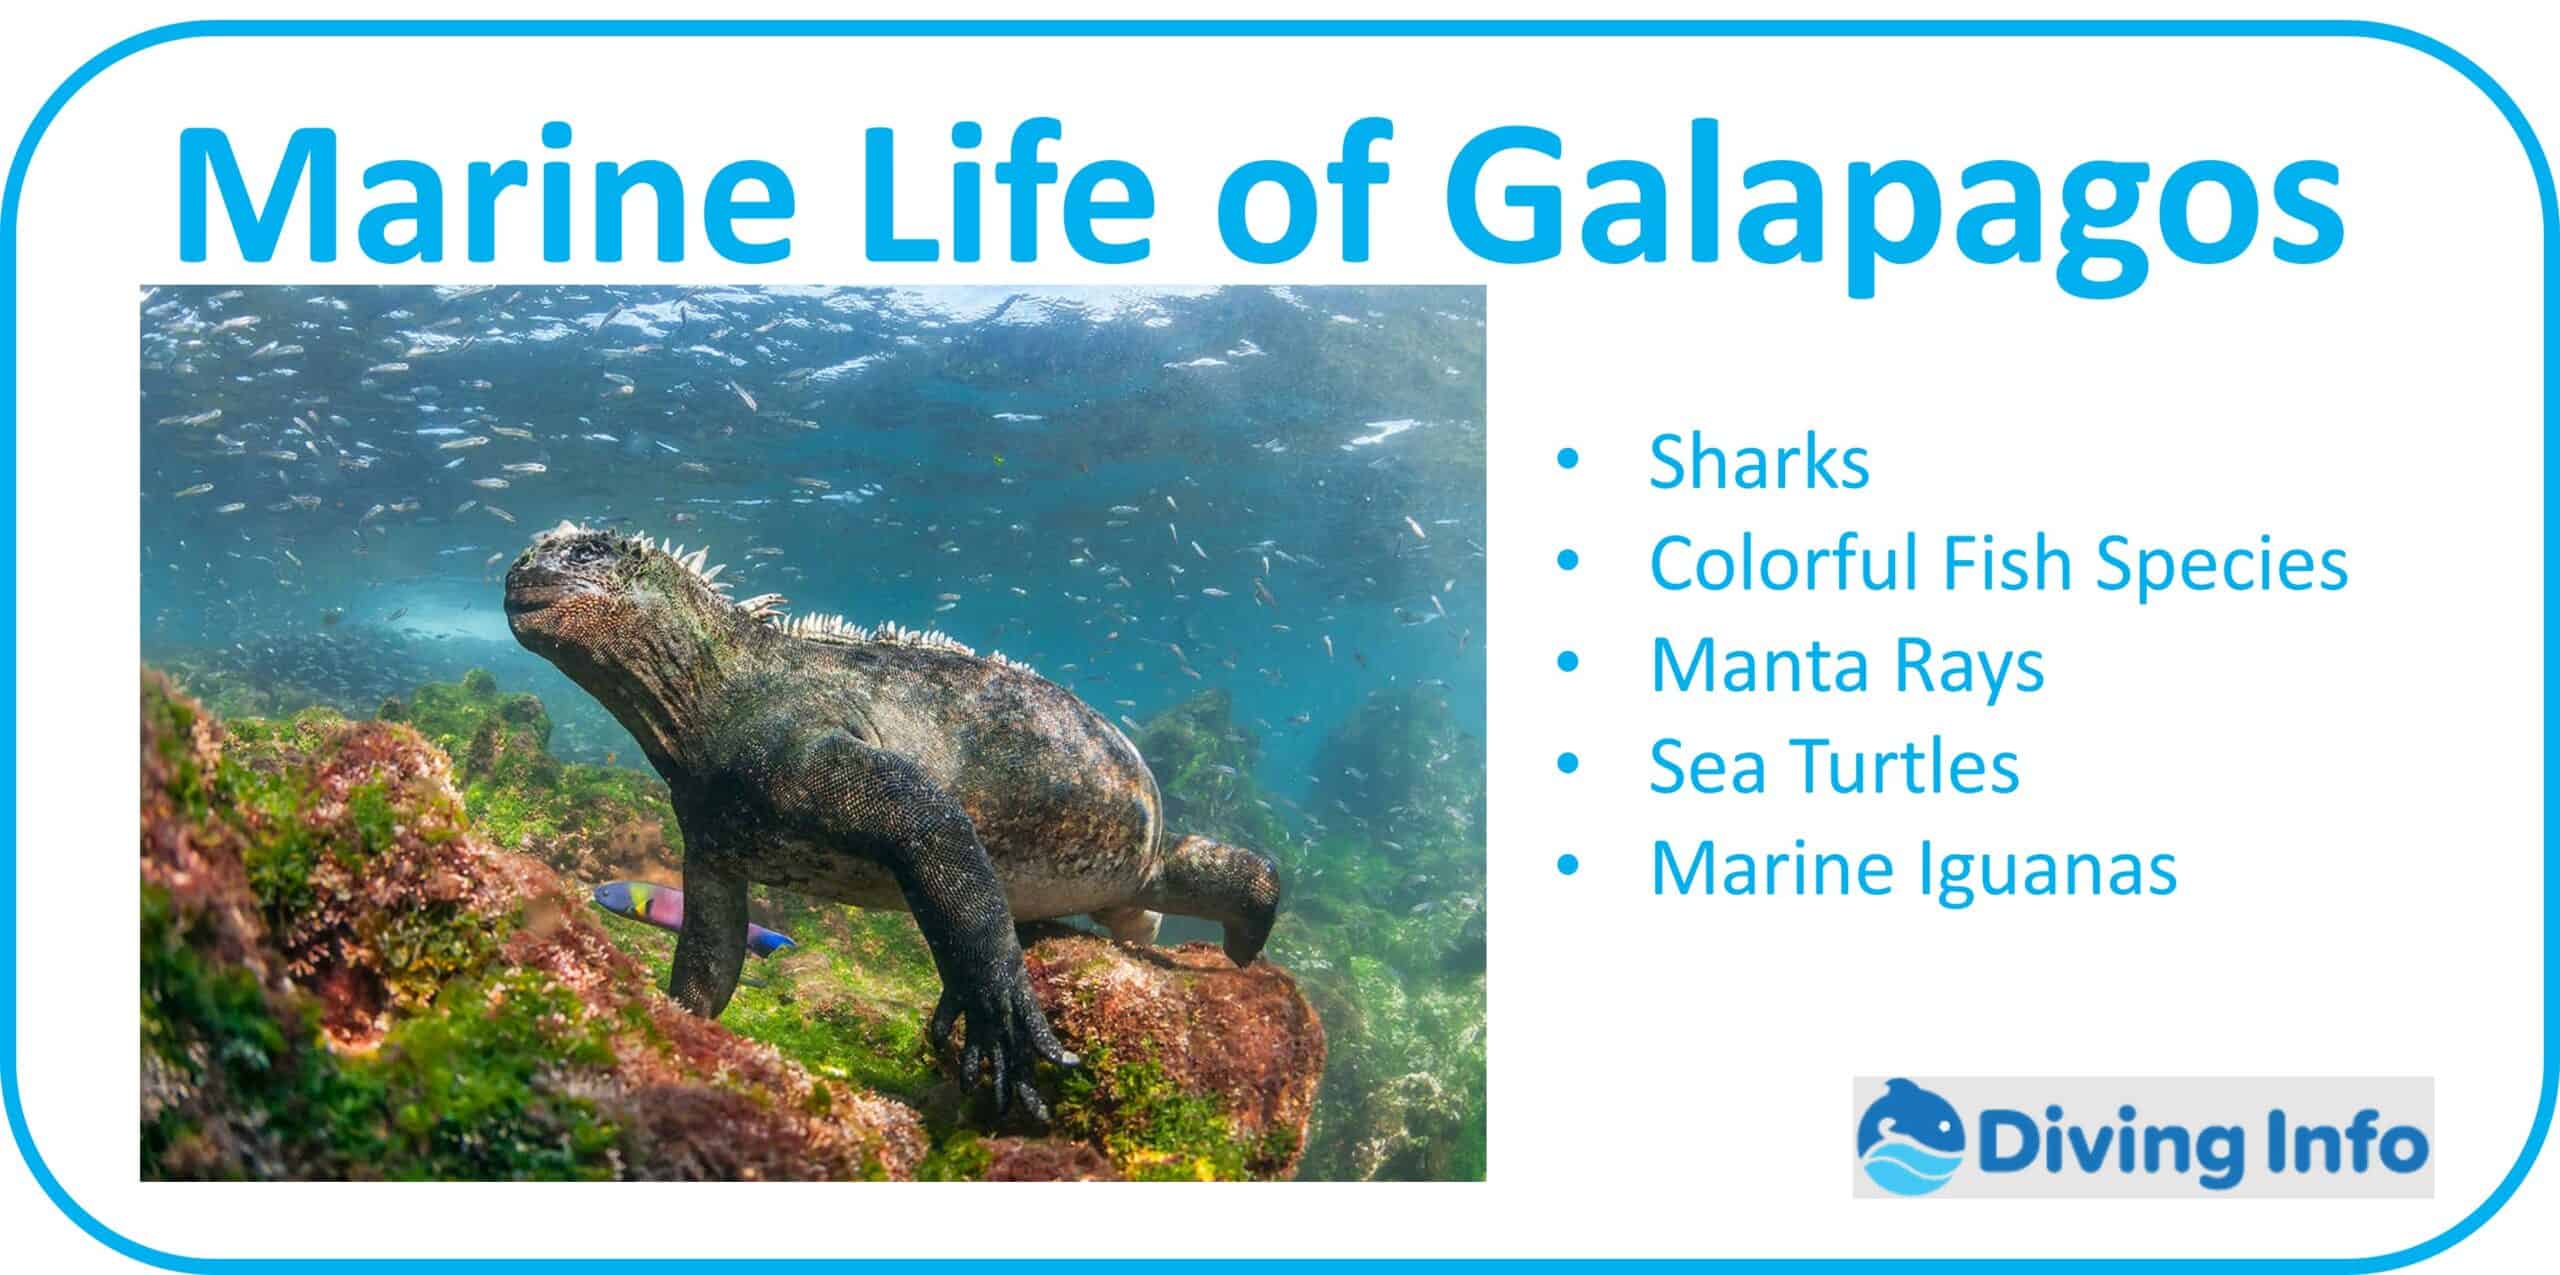 Marine Life of Galapagos